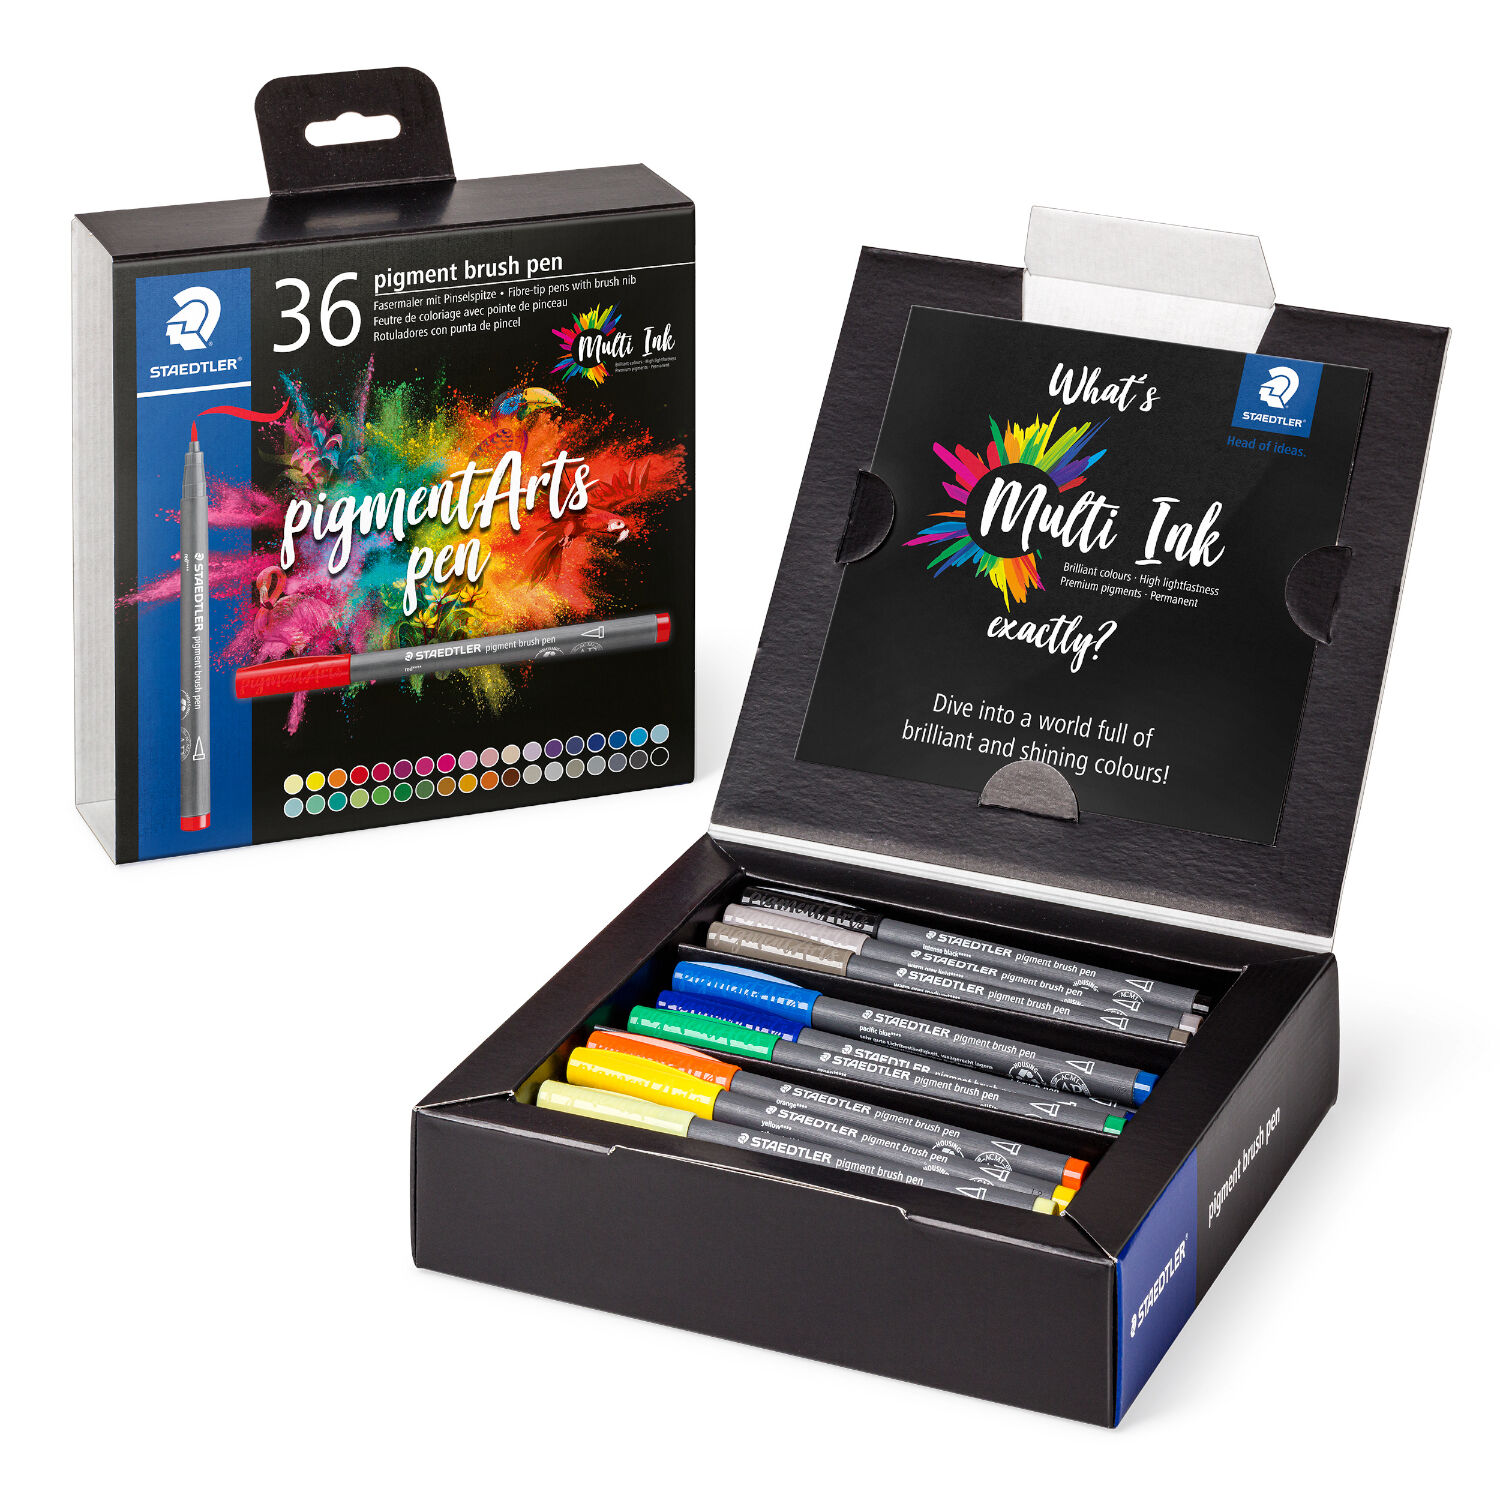 NEU Staedtler Pigment Brush Pen Set, 36 Stifte Bild 2